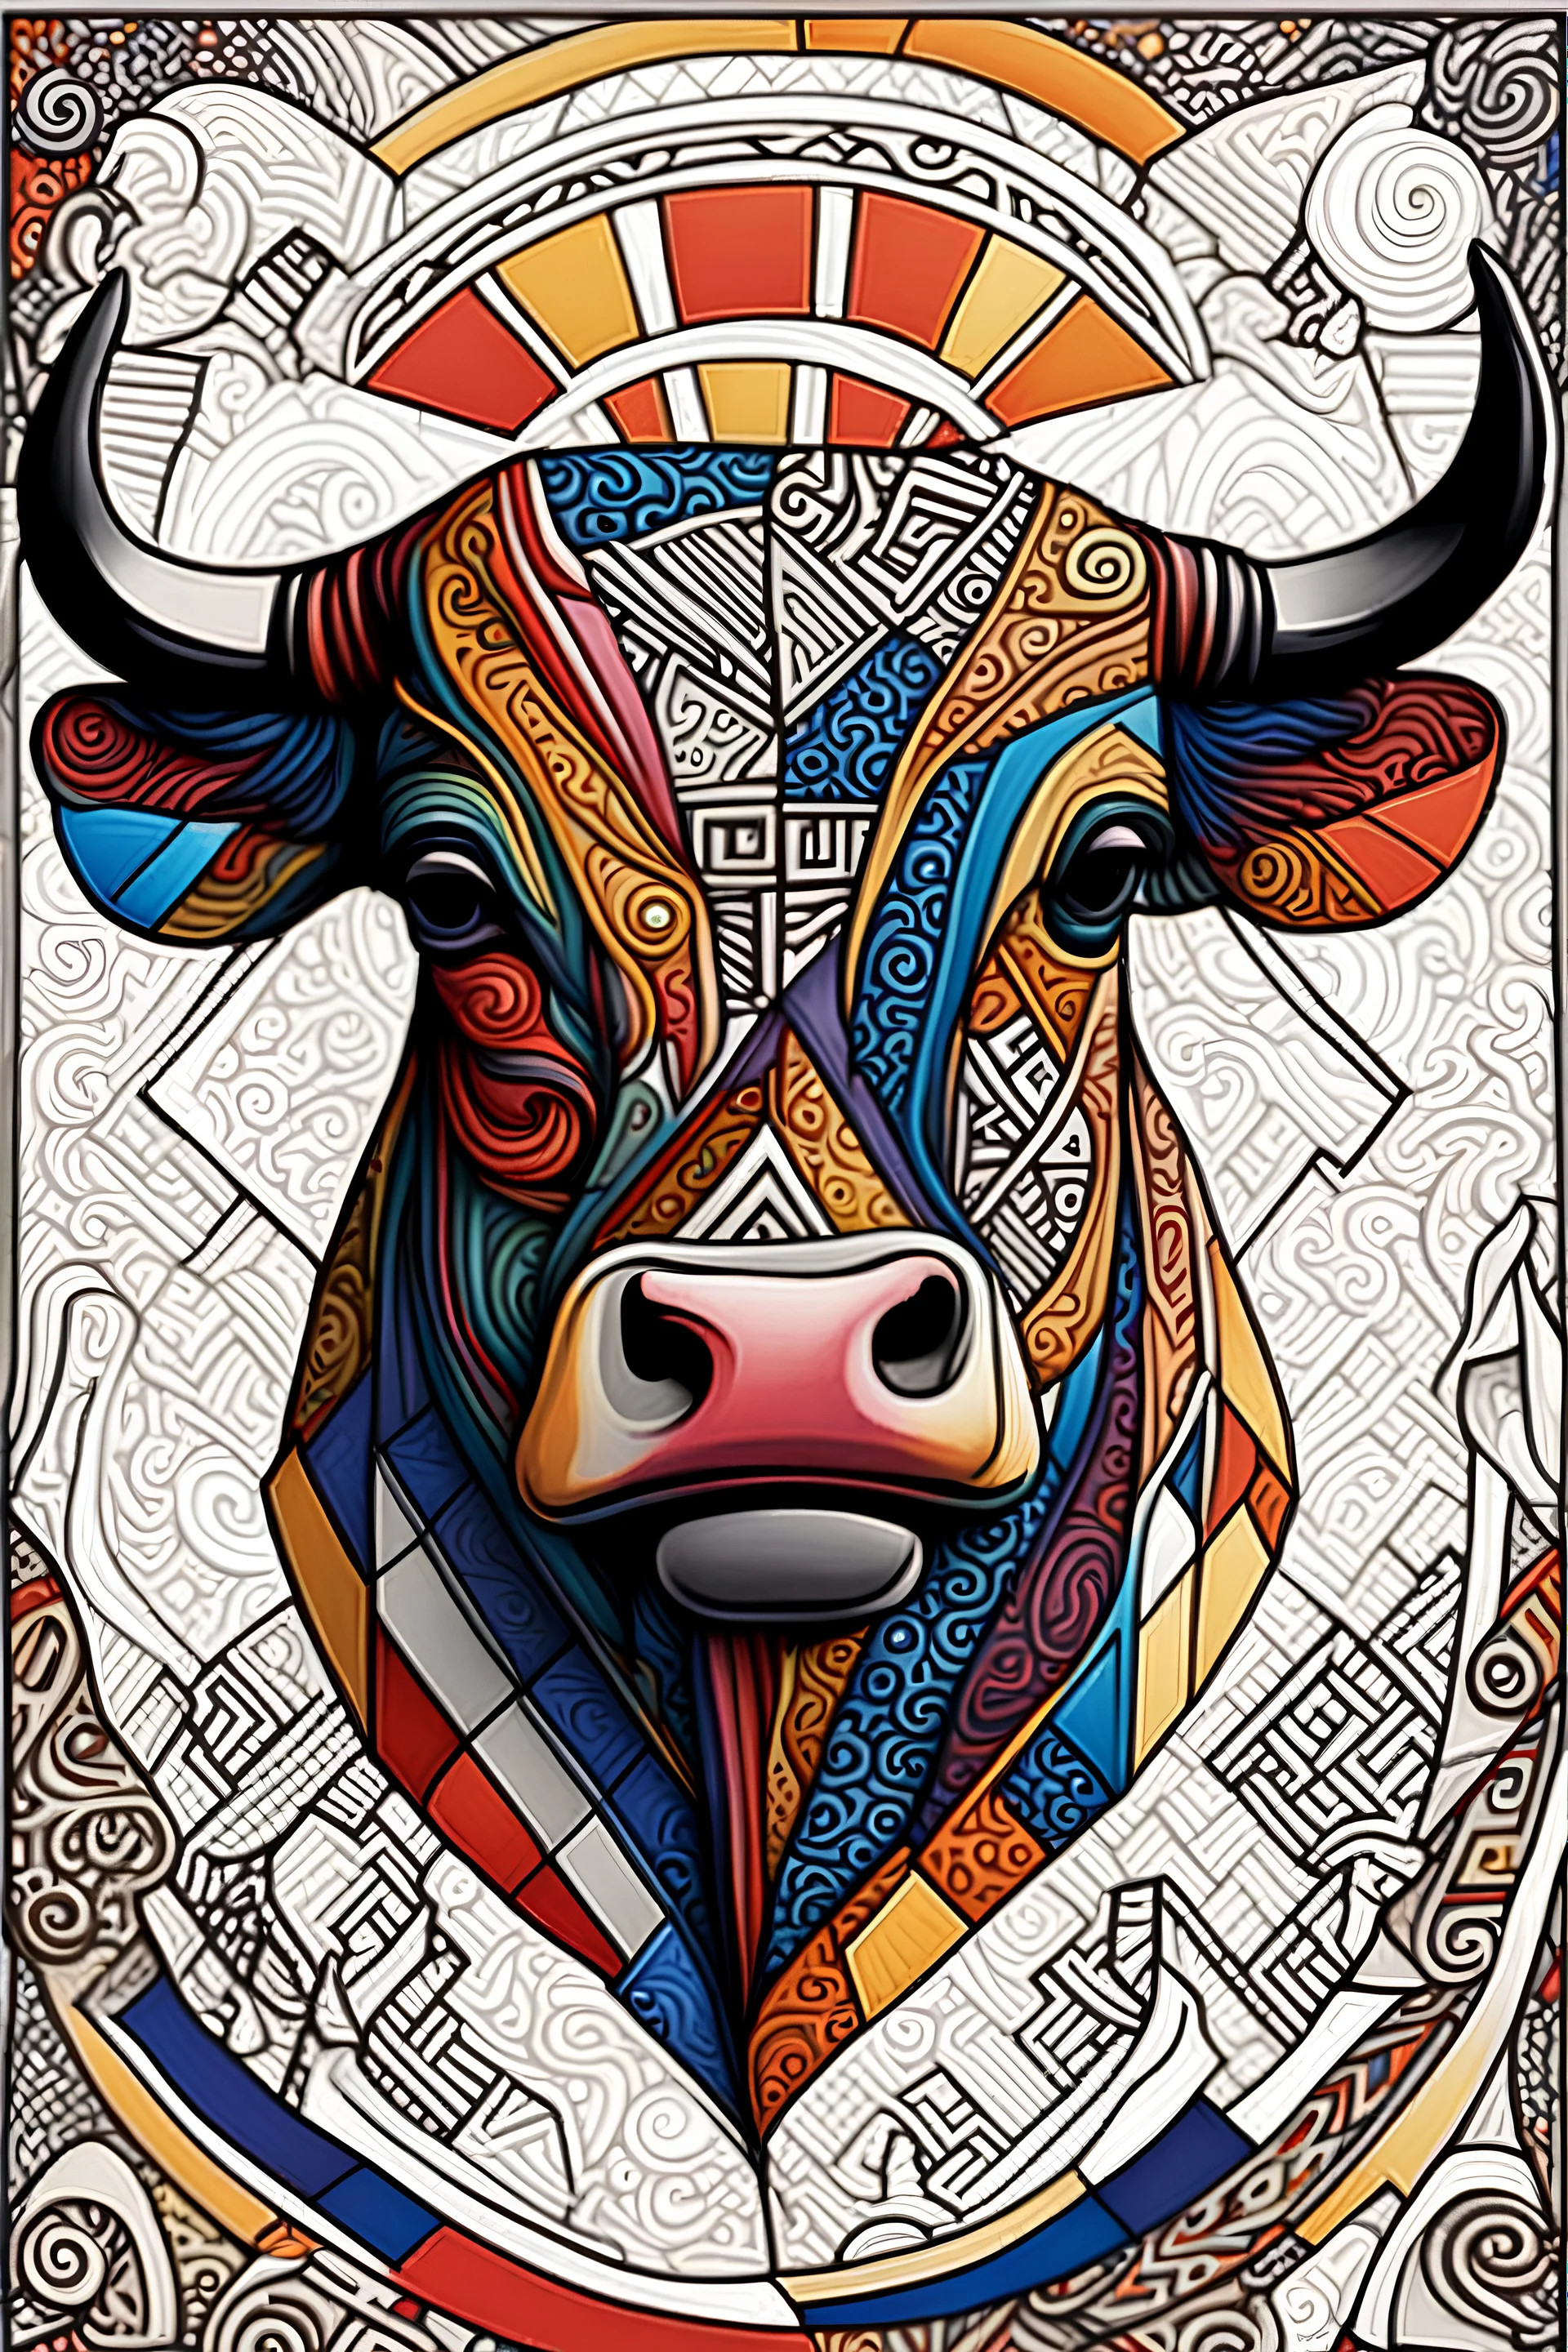 Trompe-l'œil + De Stijl Zentangle Bull, Colorful